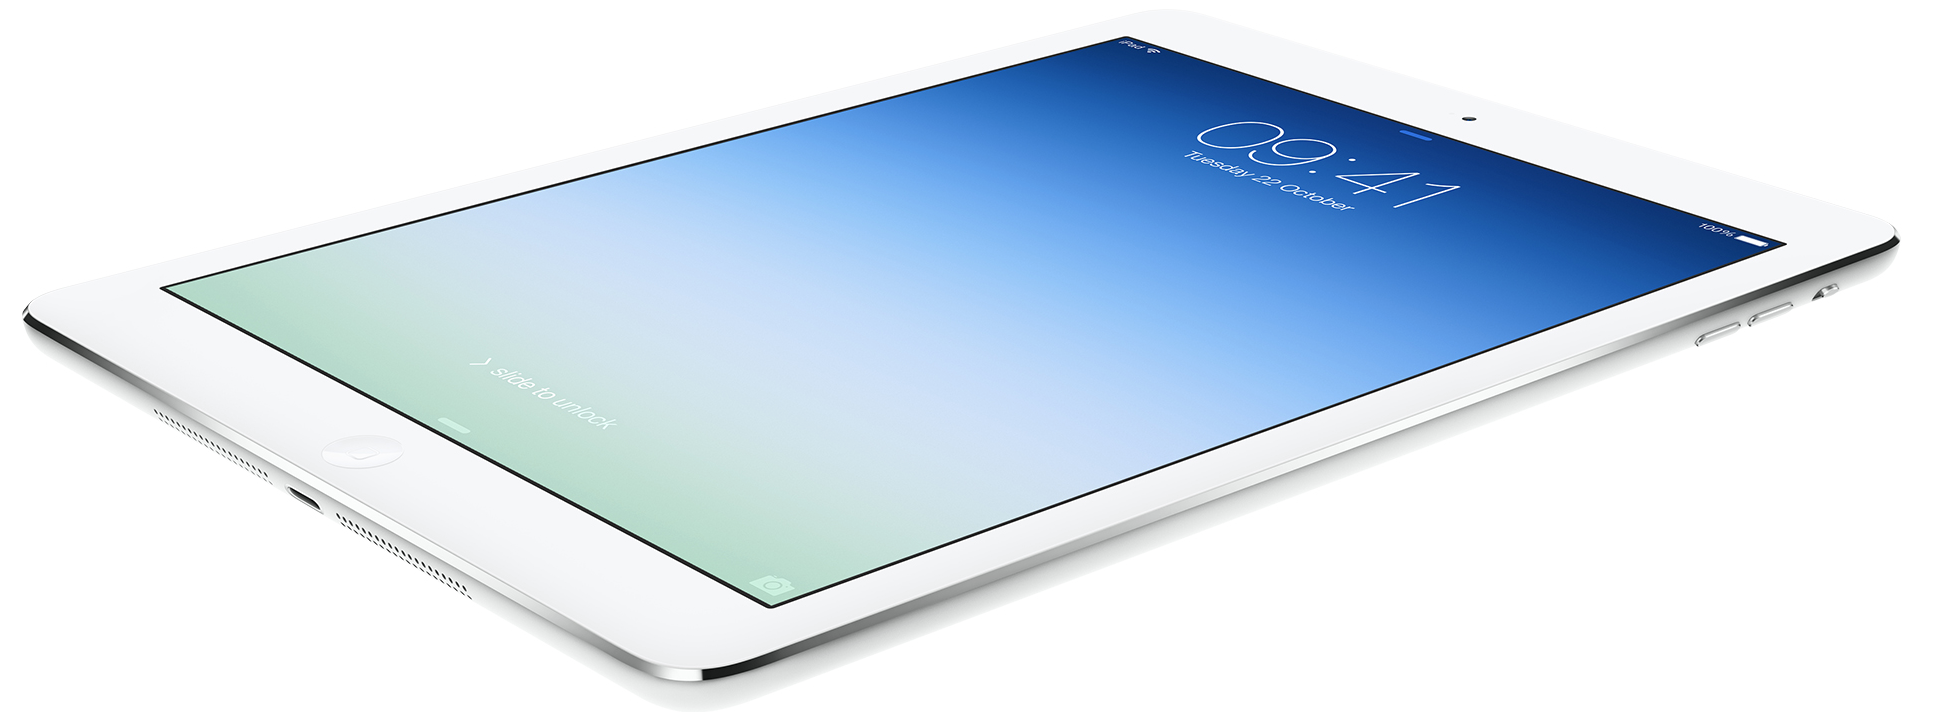 16GB iPad Air $479 shipped, iPad 2 64GB Wifi + 3G unlocked: $400 shipped